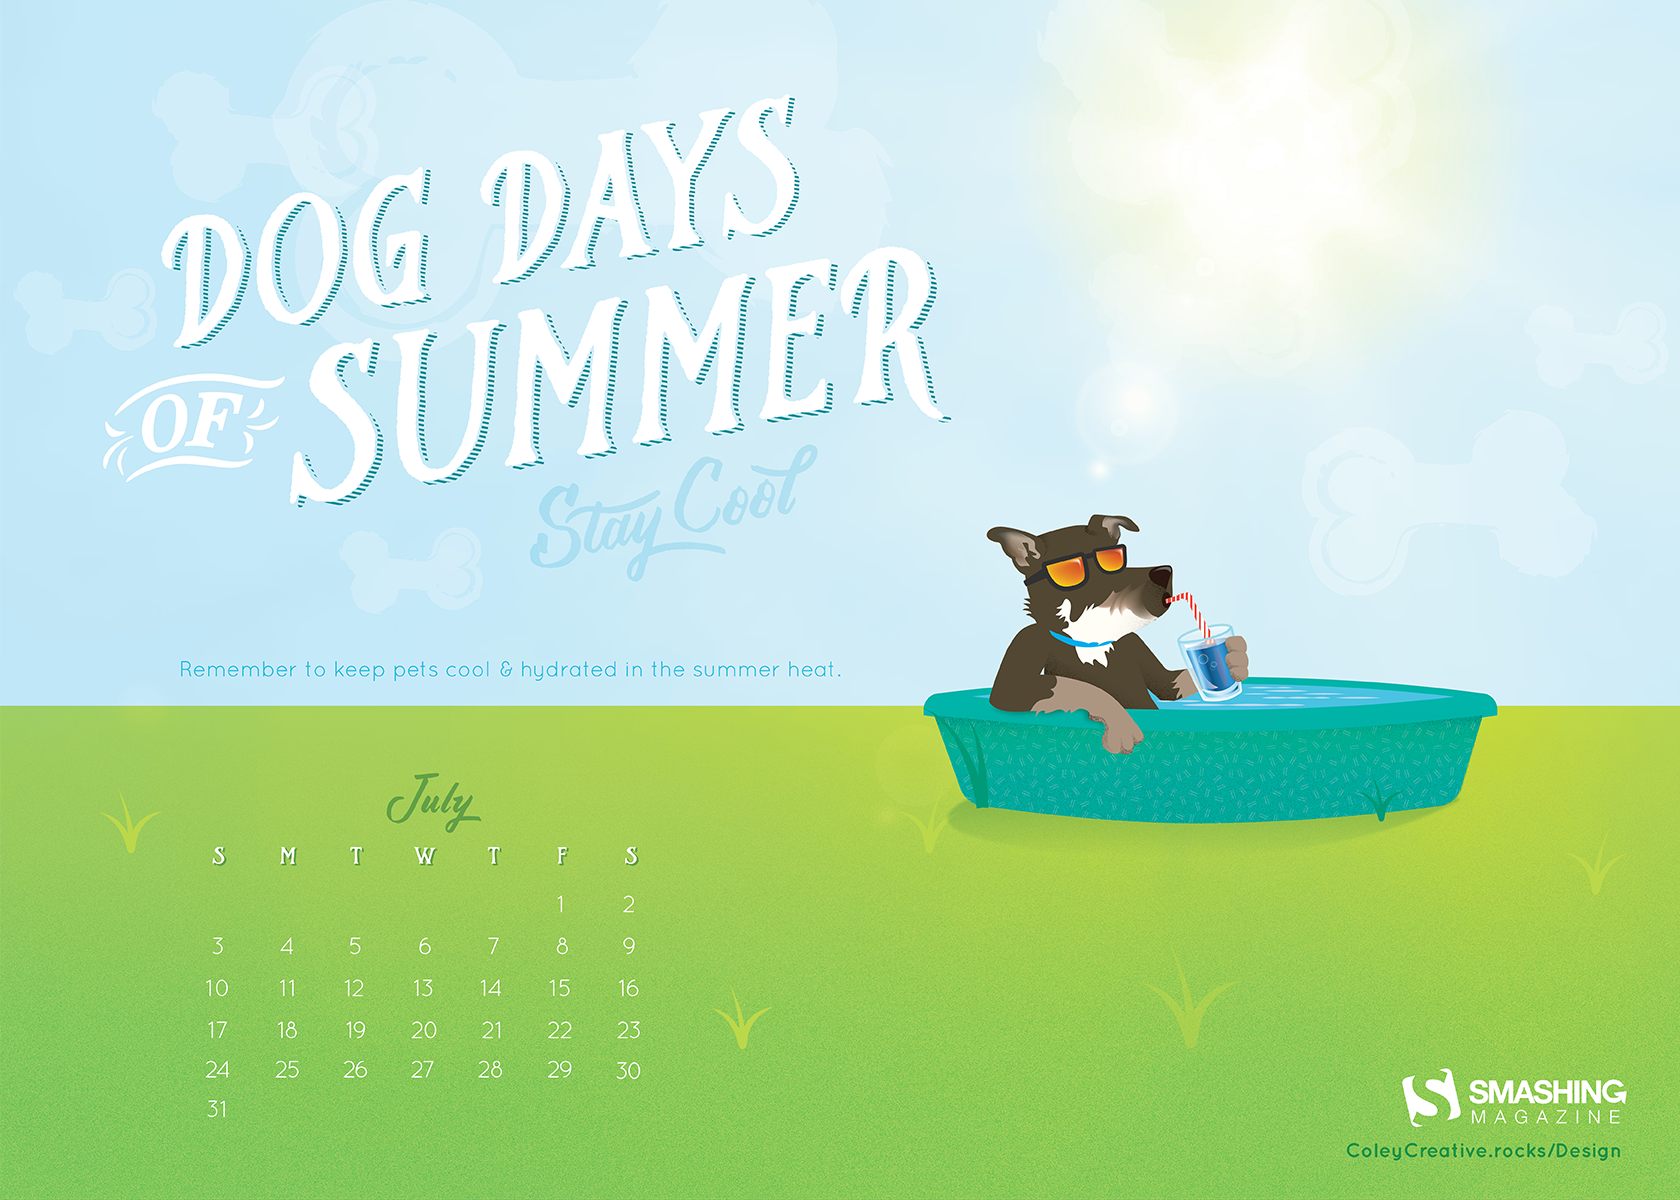 Keeping pets перевод. Dog Days of Summer. Dog Days of Summer идиома. Дог дей обои. Обои календарь июль.